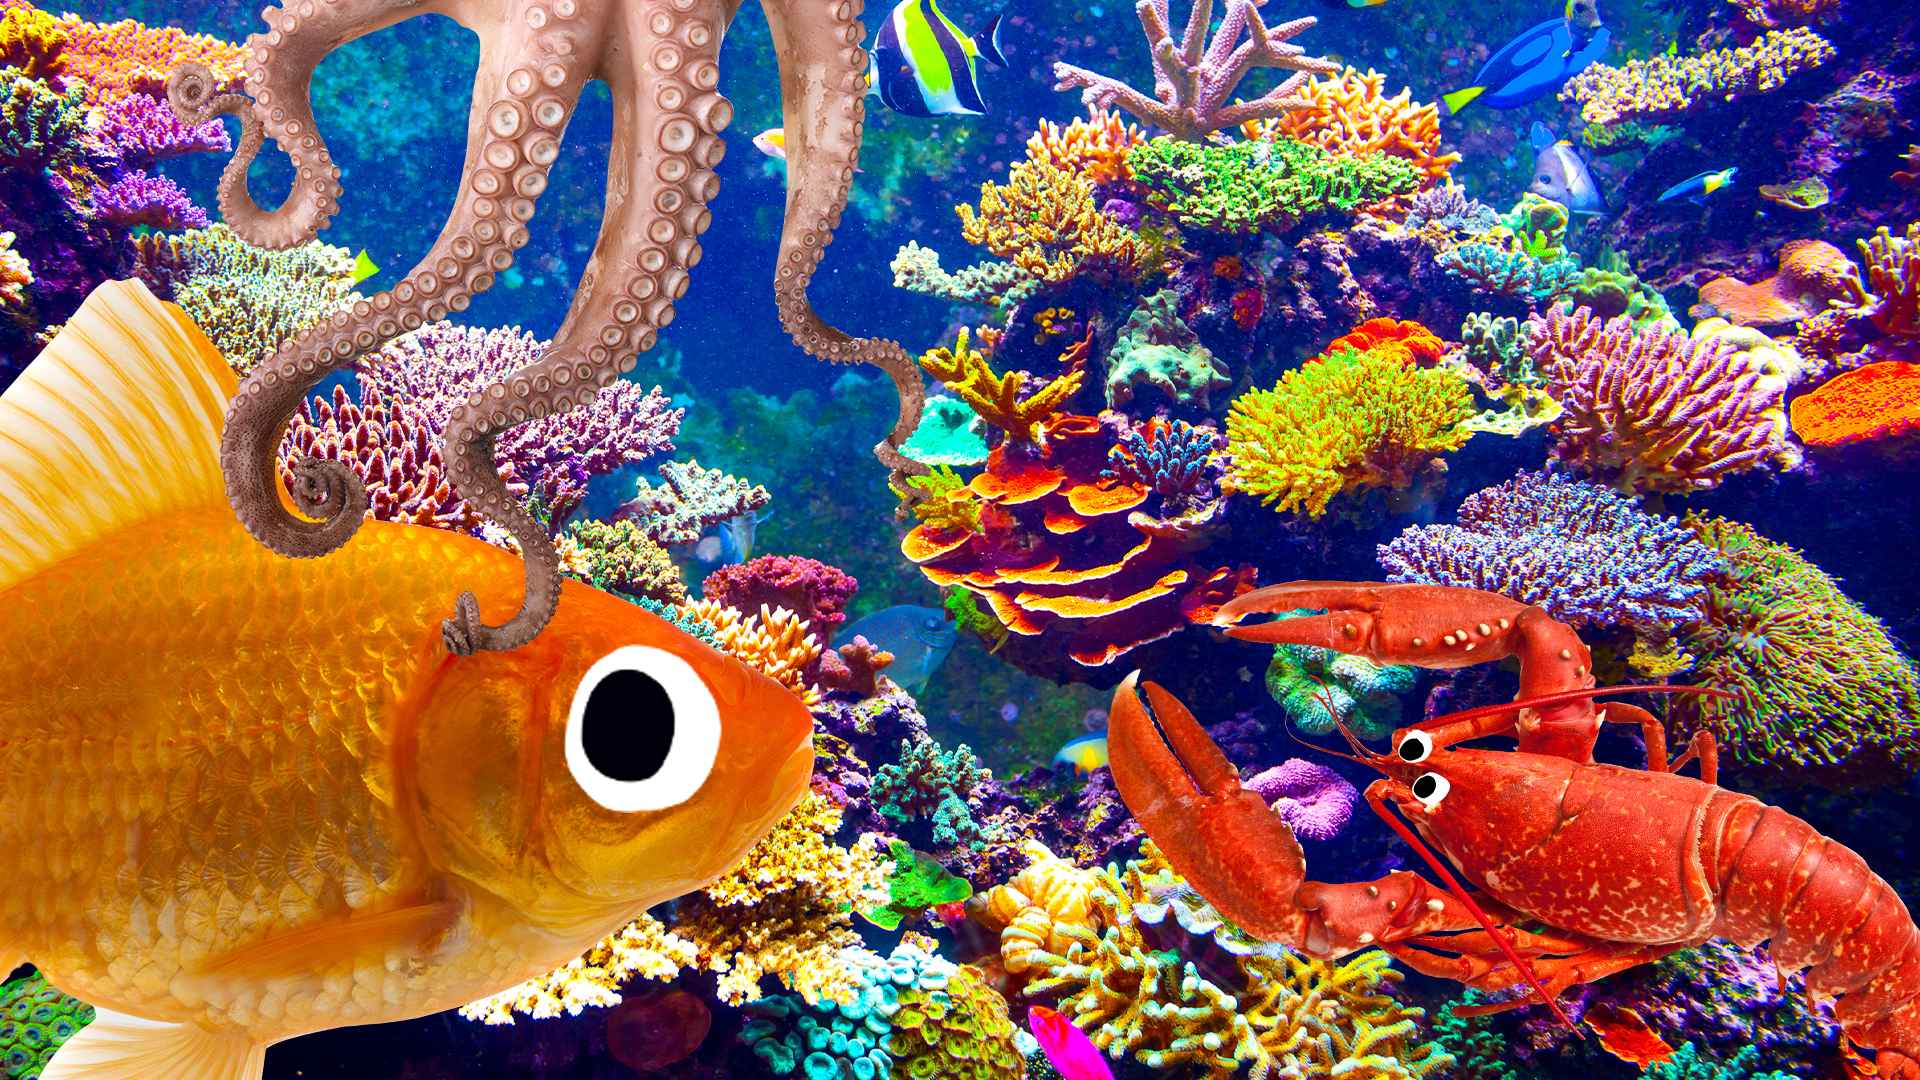 Sea creatures on an underwater reefs